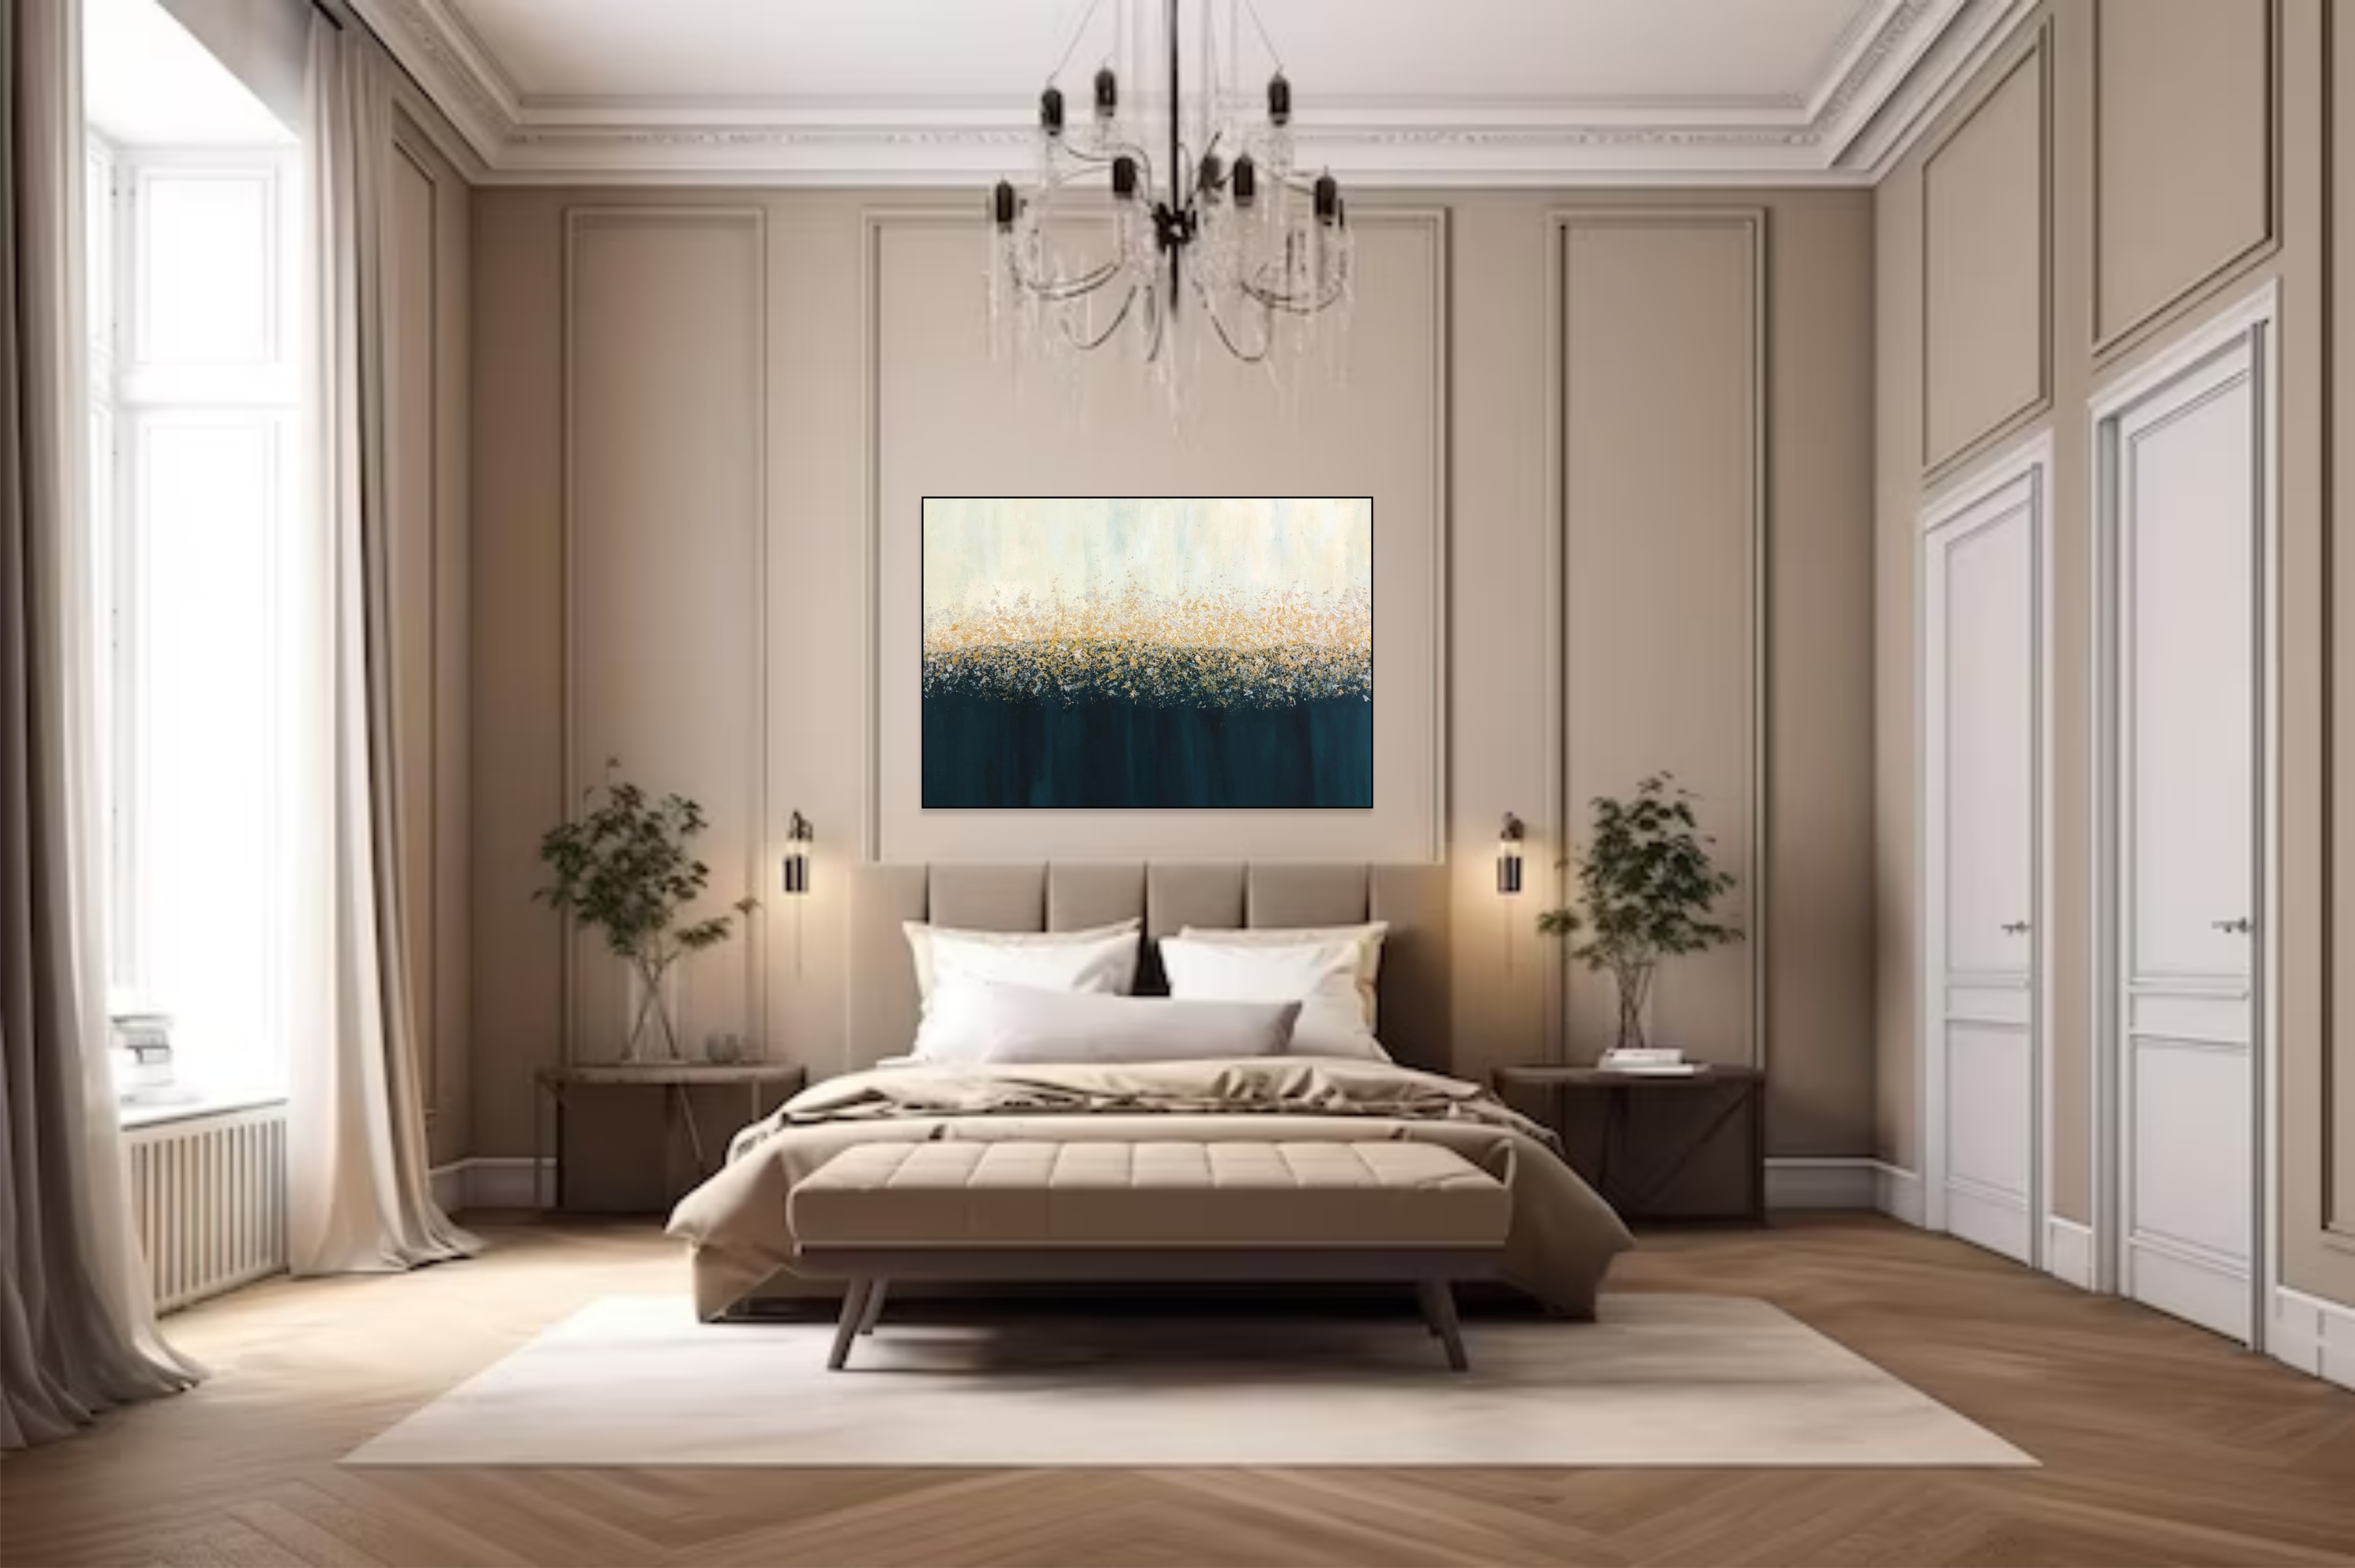 6 Bedroom Interior Paintings slider2-image-2